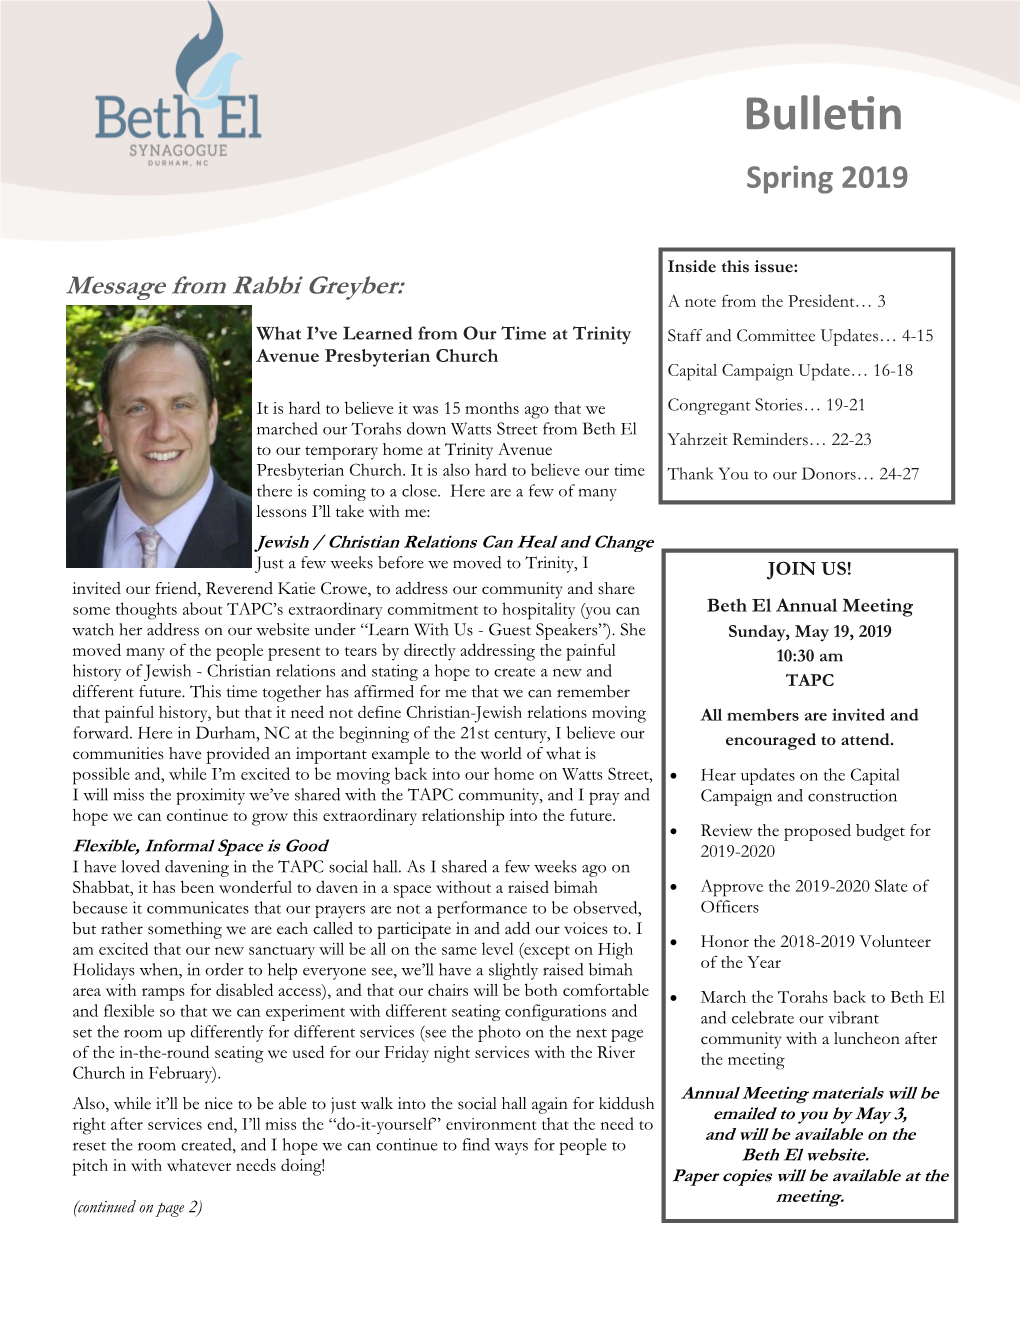 Bulletin Spring 2019